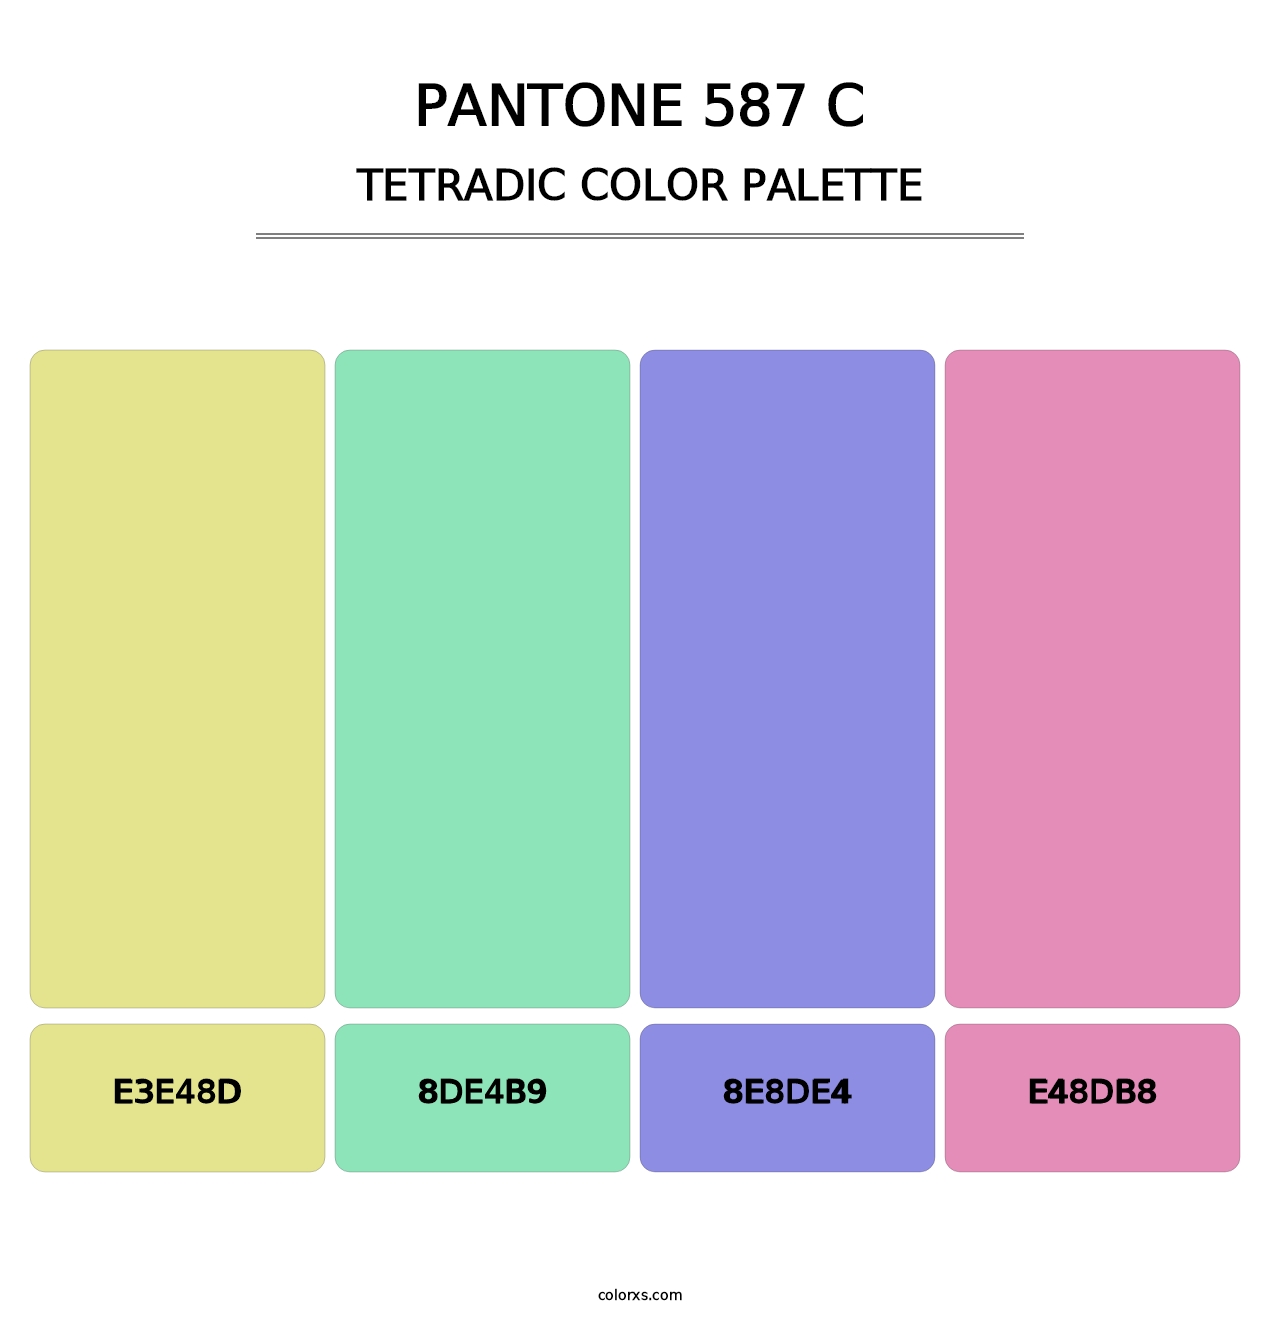 PANTONE 587 C - Tetradic Color Palette